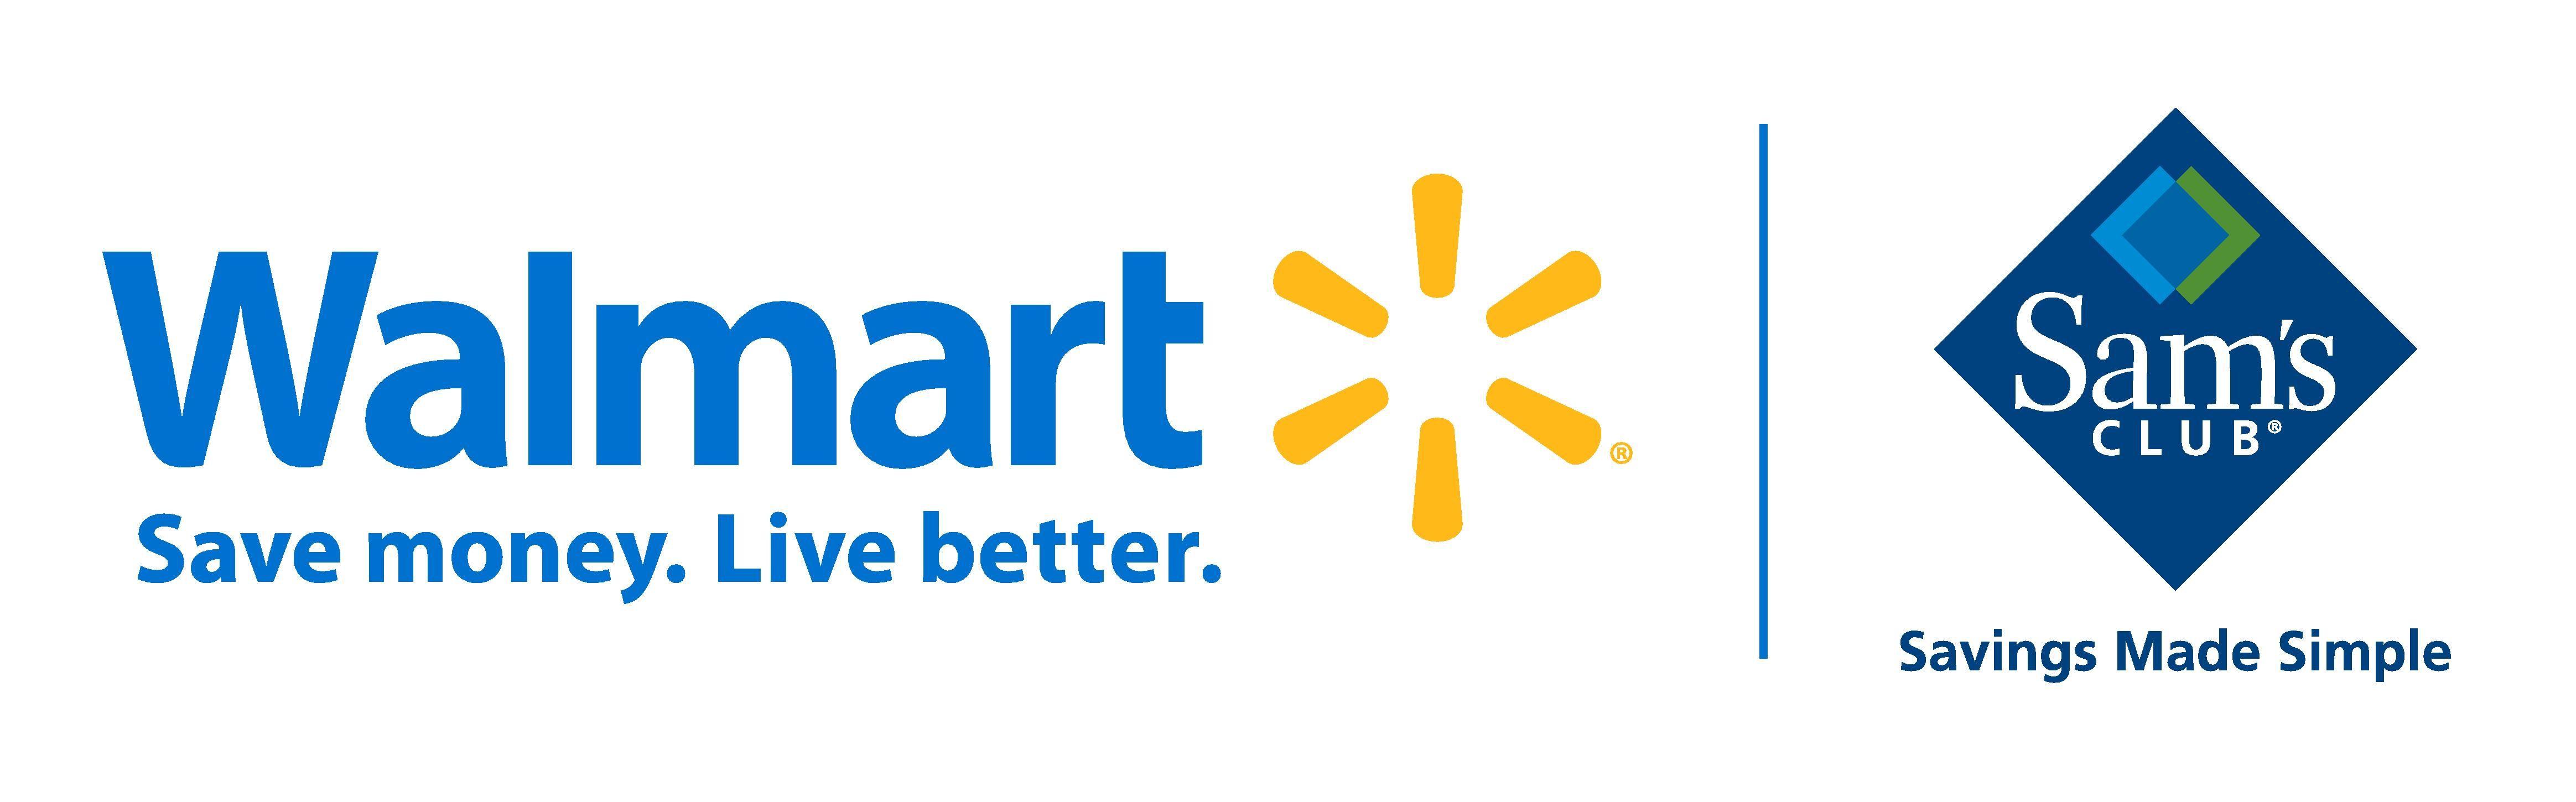 Pay Walmart Logo - Walmart to bump worker pay; Q4 sales up. – My Retail World